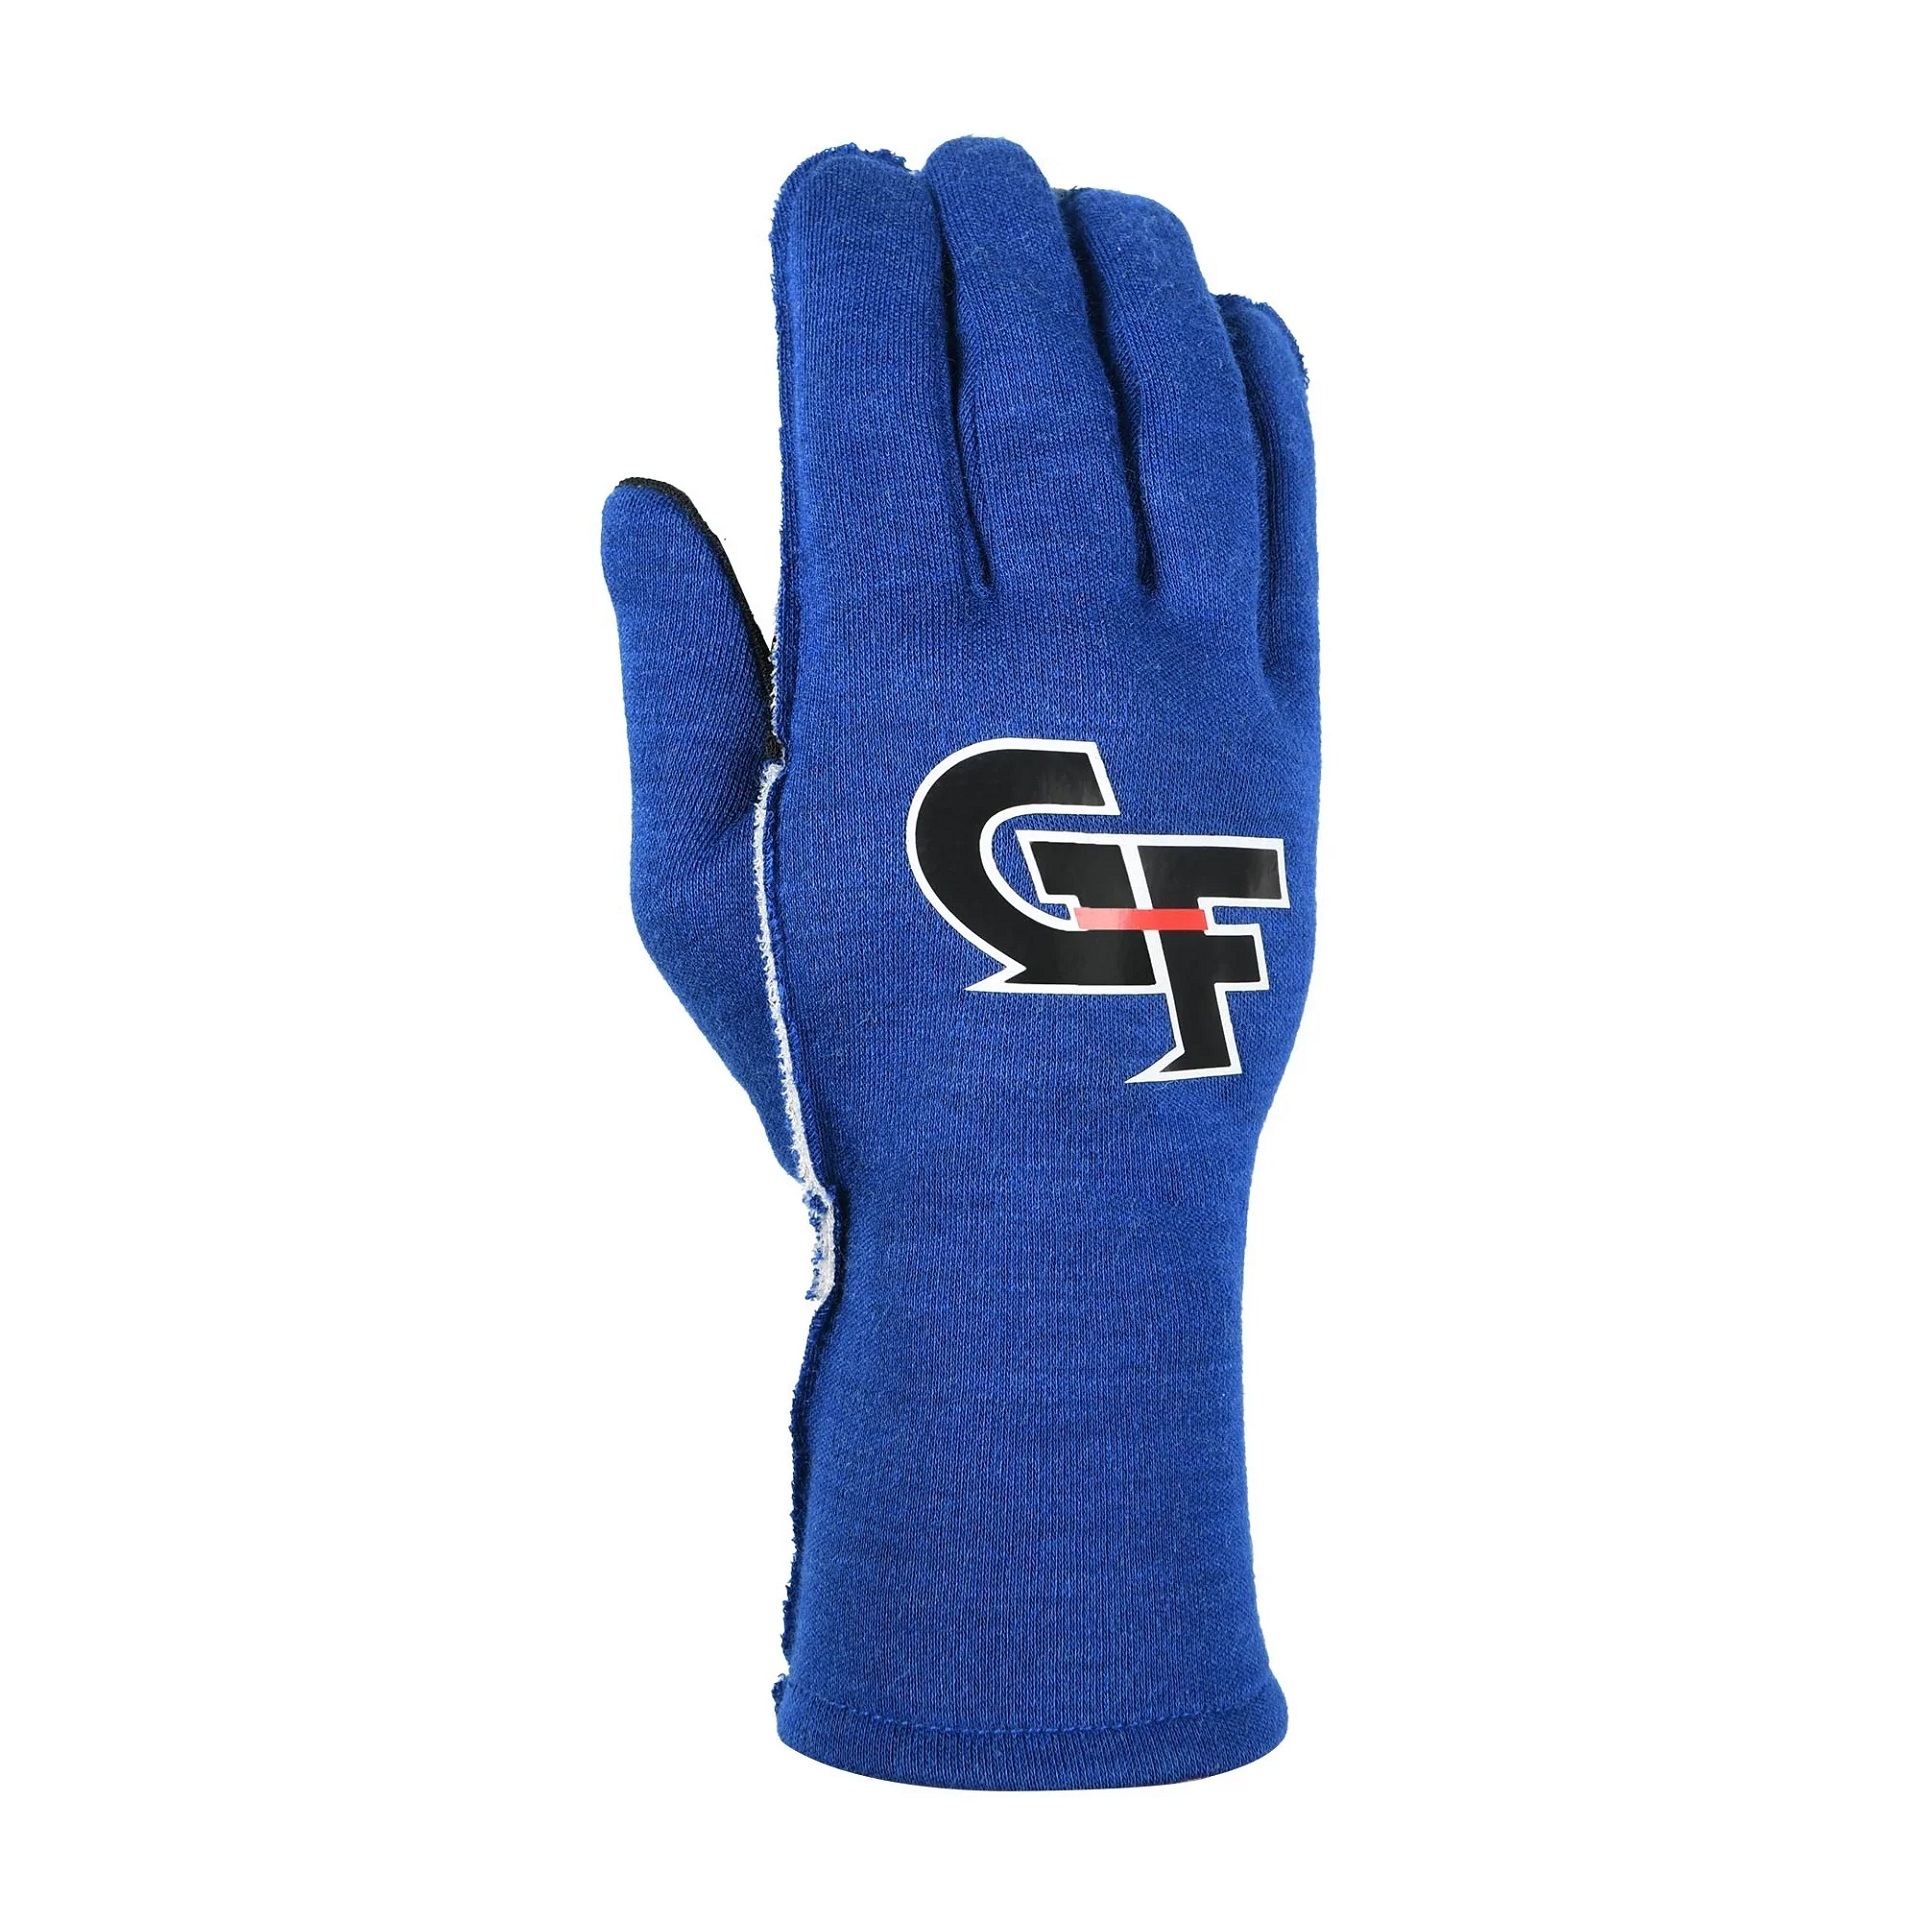 G-Limit RS Gloves MED BU - 54000MEDBU